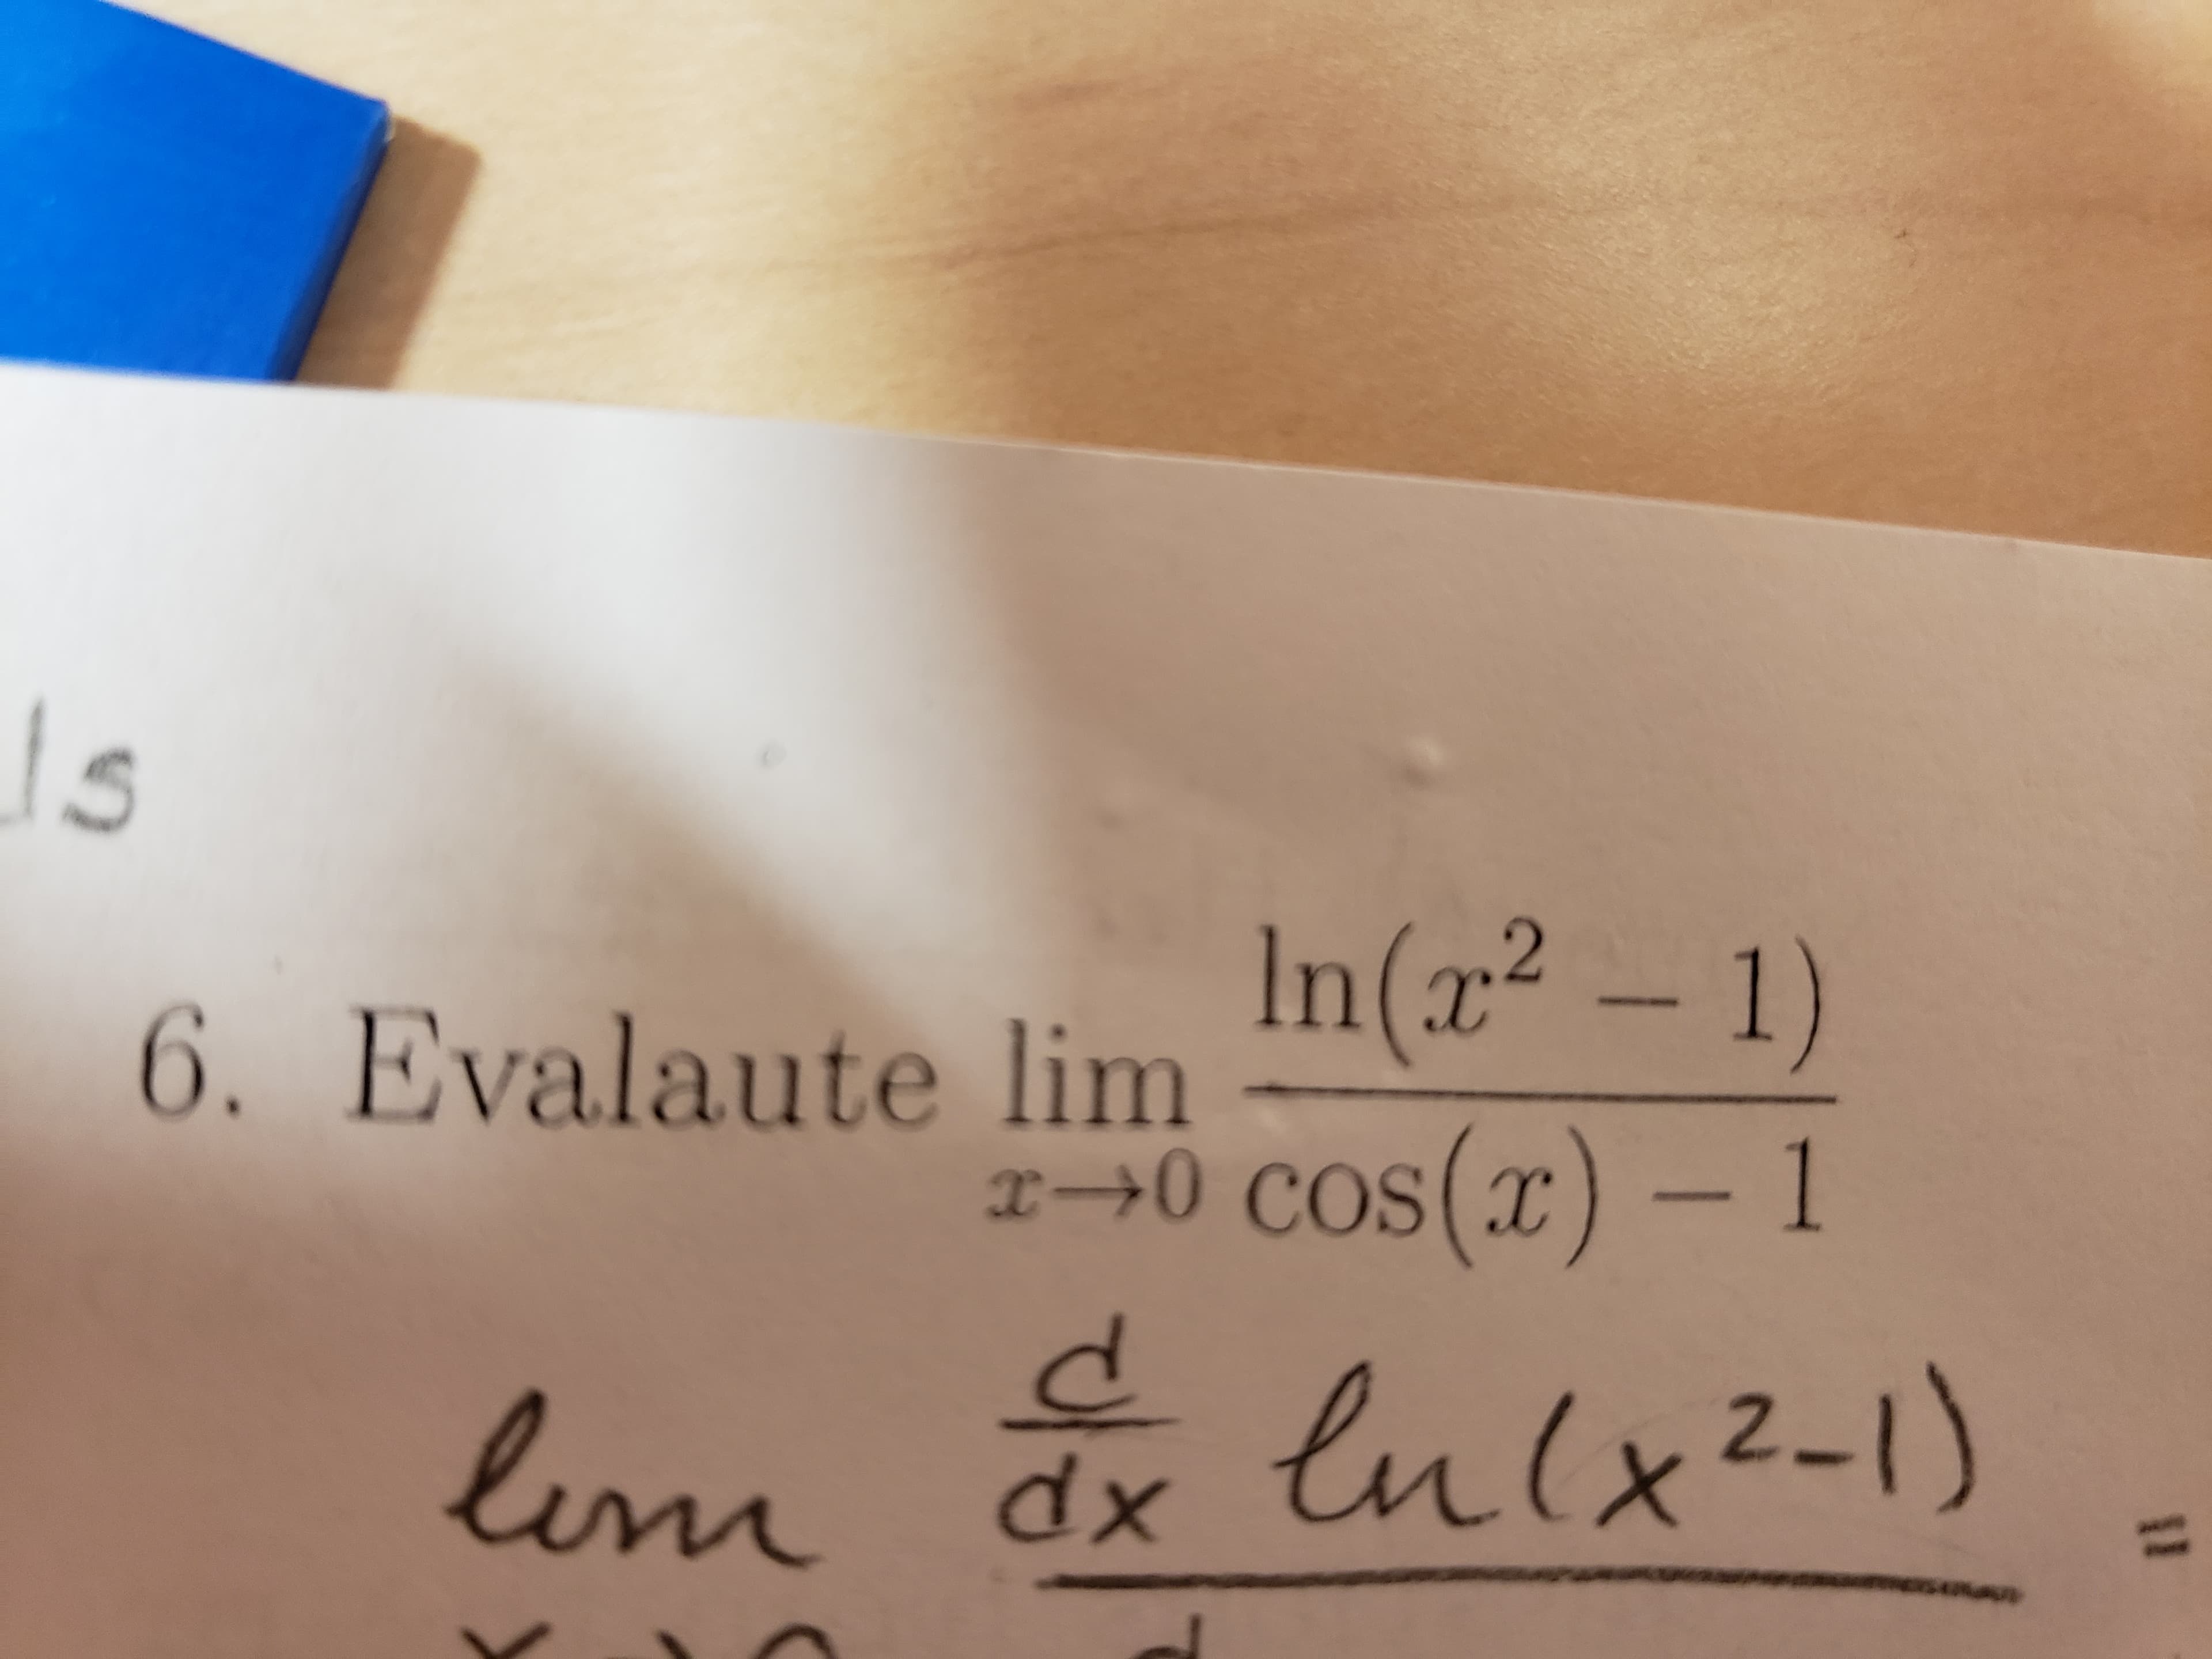 Is
In(x² – 1)
- 1)
6. Evalaute lim
n
cos(x)-1
r lulx2-1)
lem lulx²-1)
